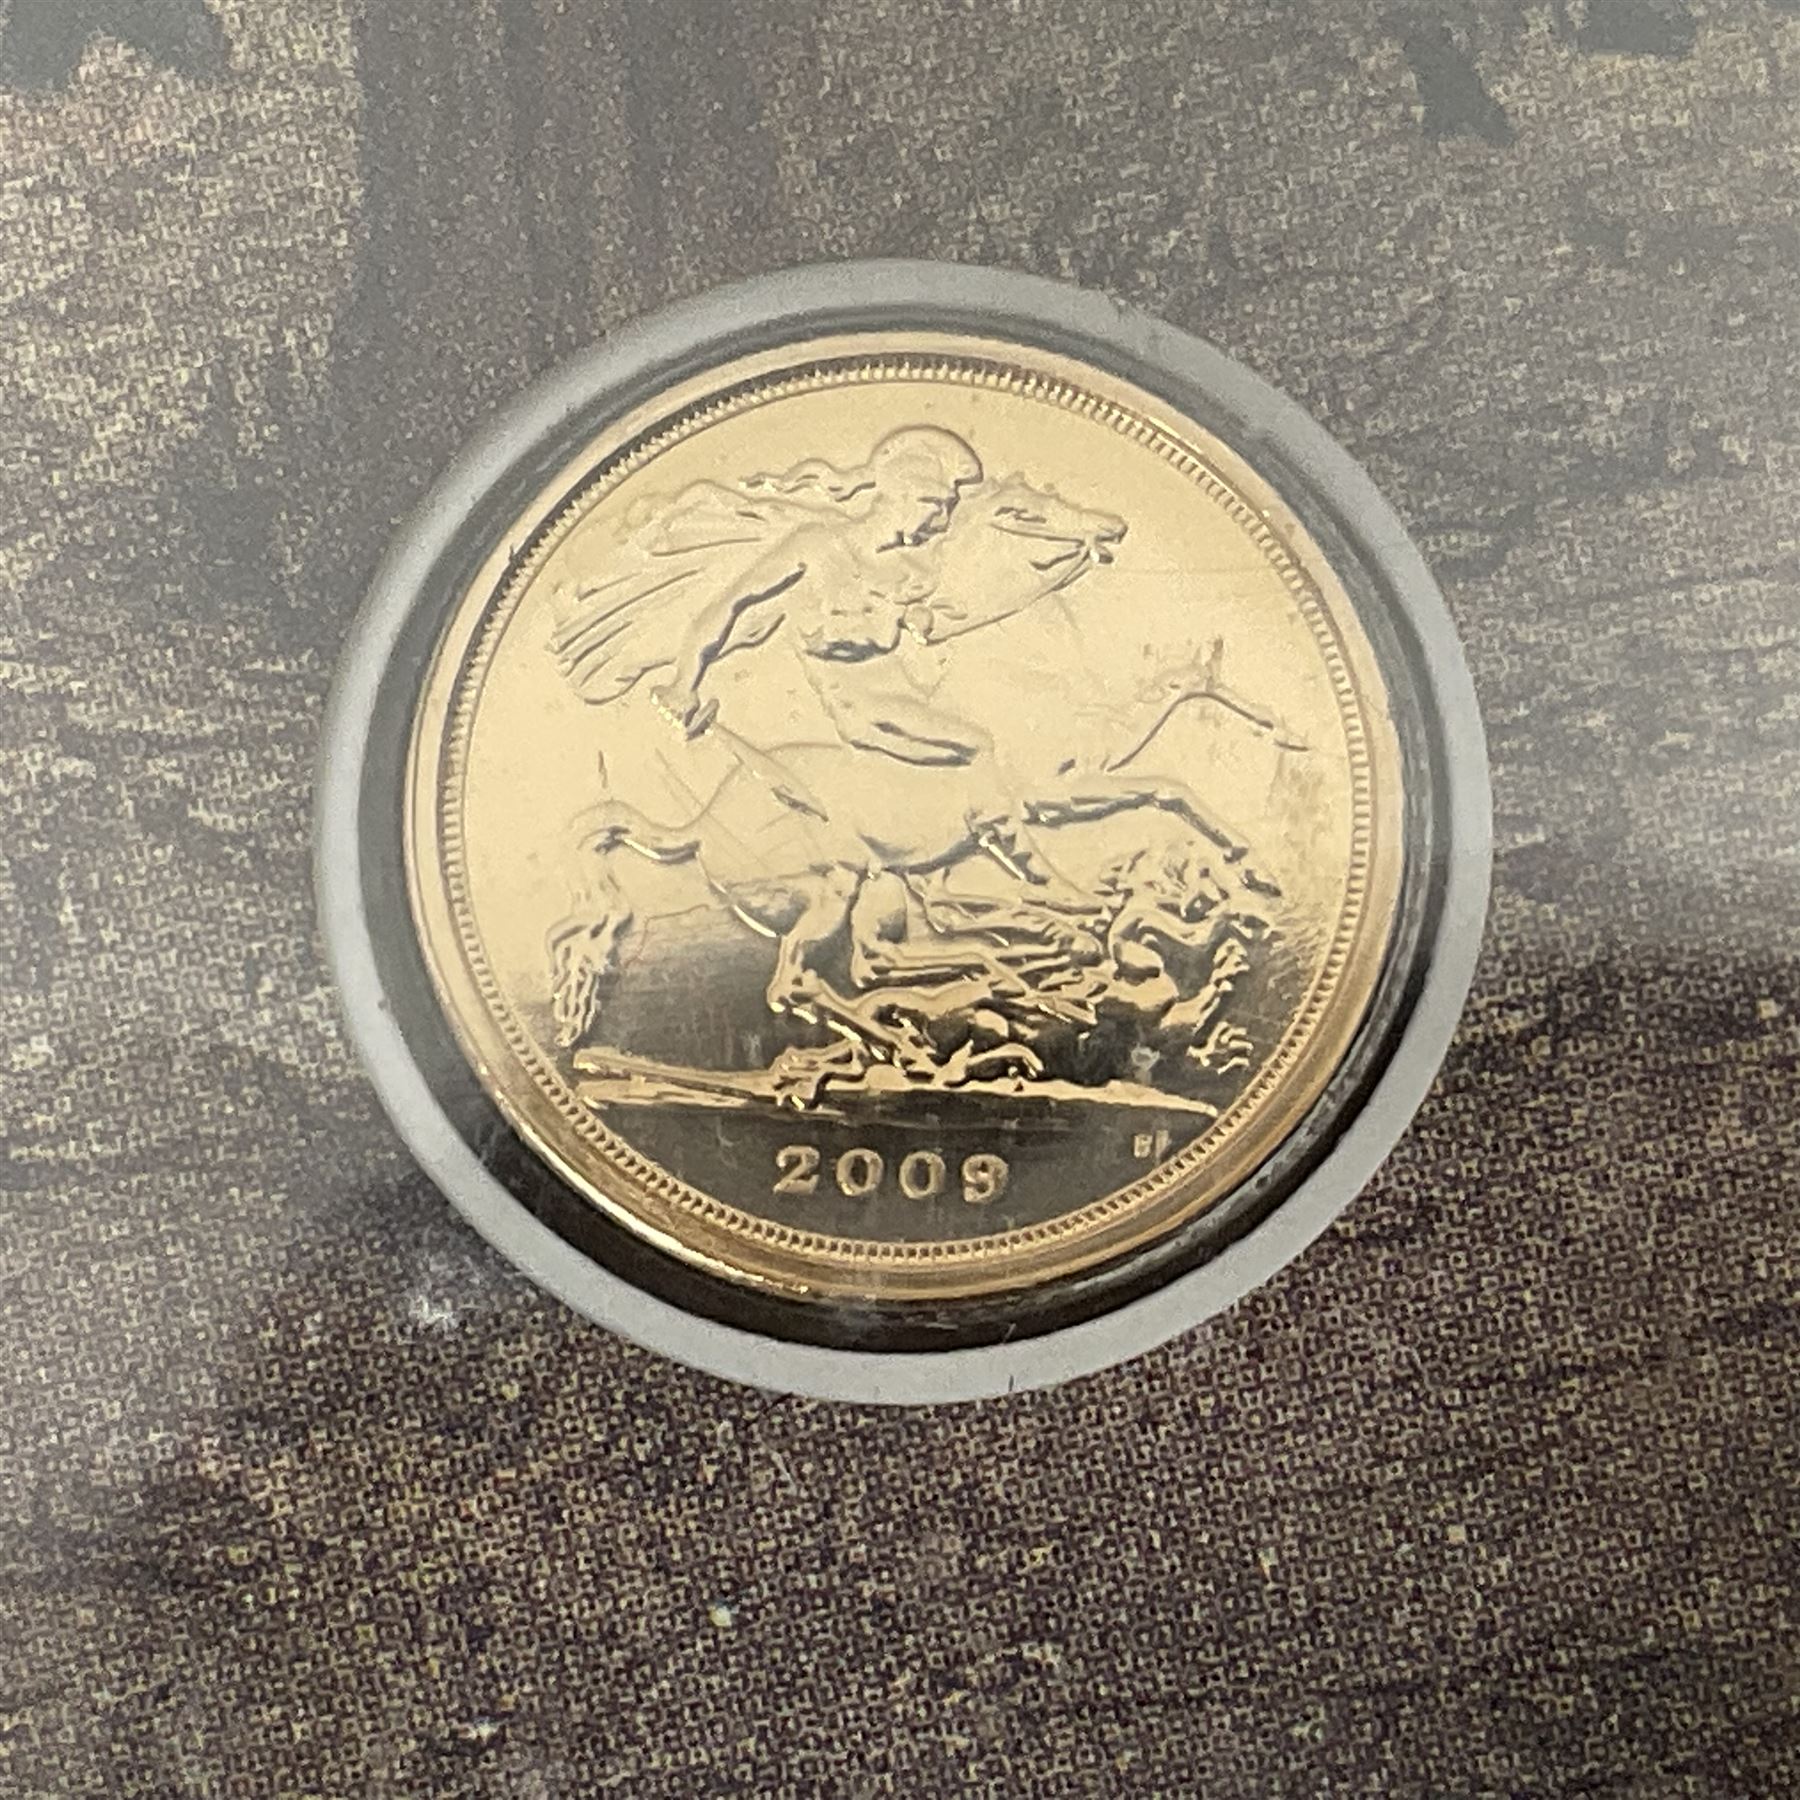 Queen Elizabeth II 2009 gold quarter sovereign coin - Image 3 of 6